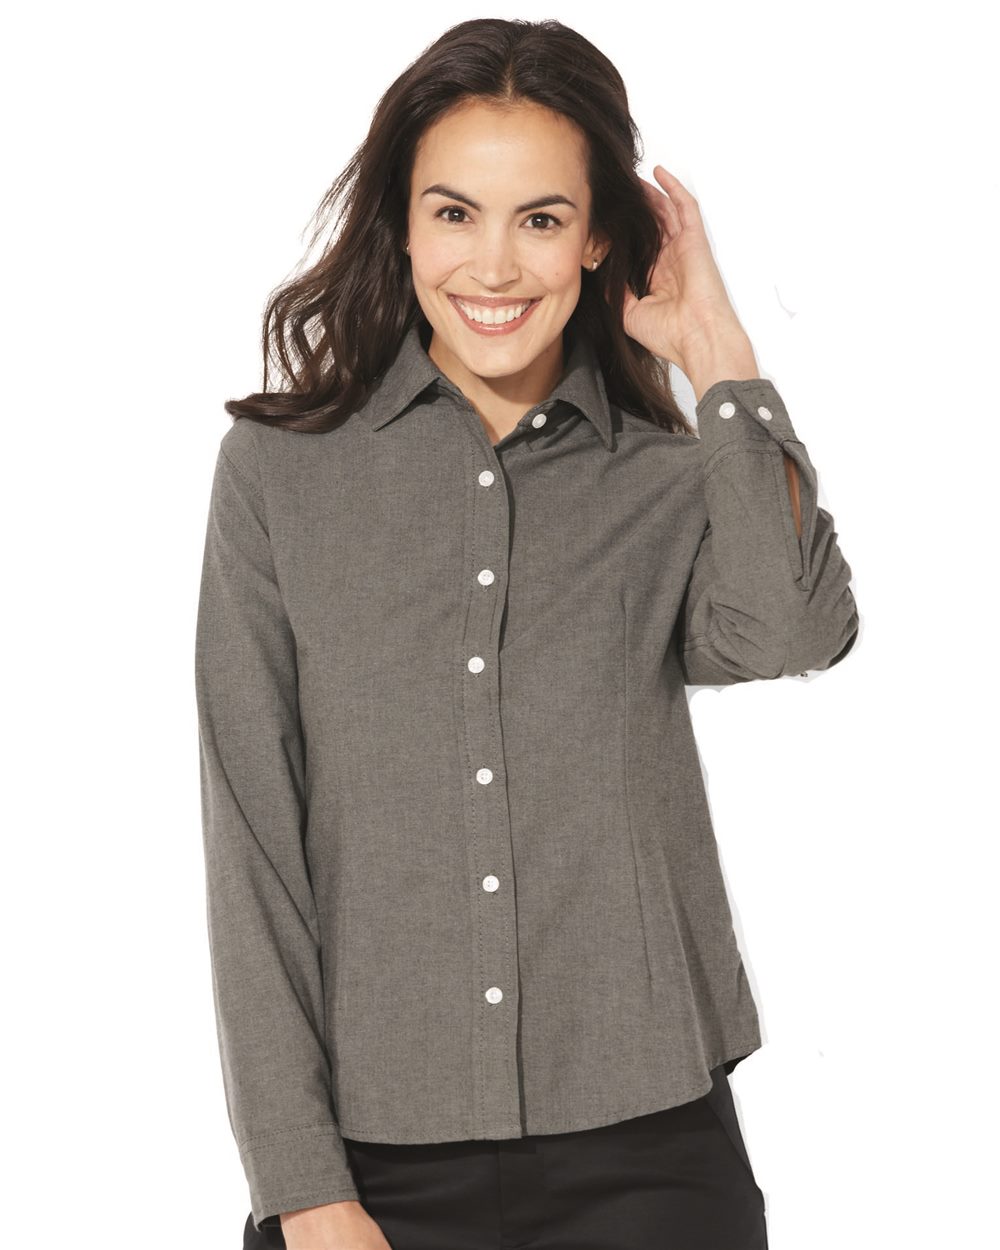 FeatherLite 5233 Ladies' Long Sleeve Oxford Shirt